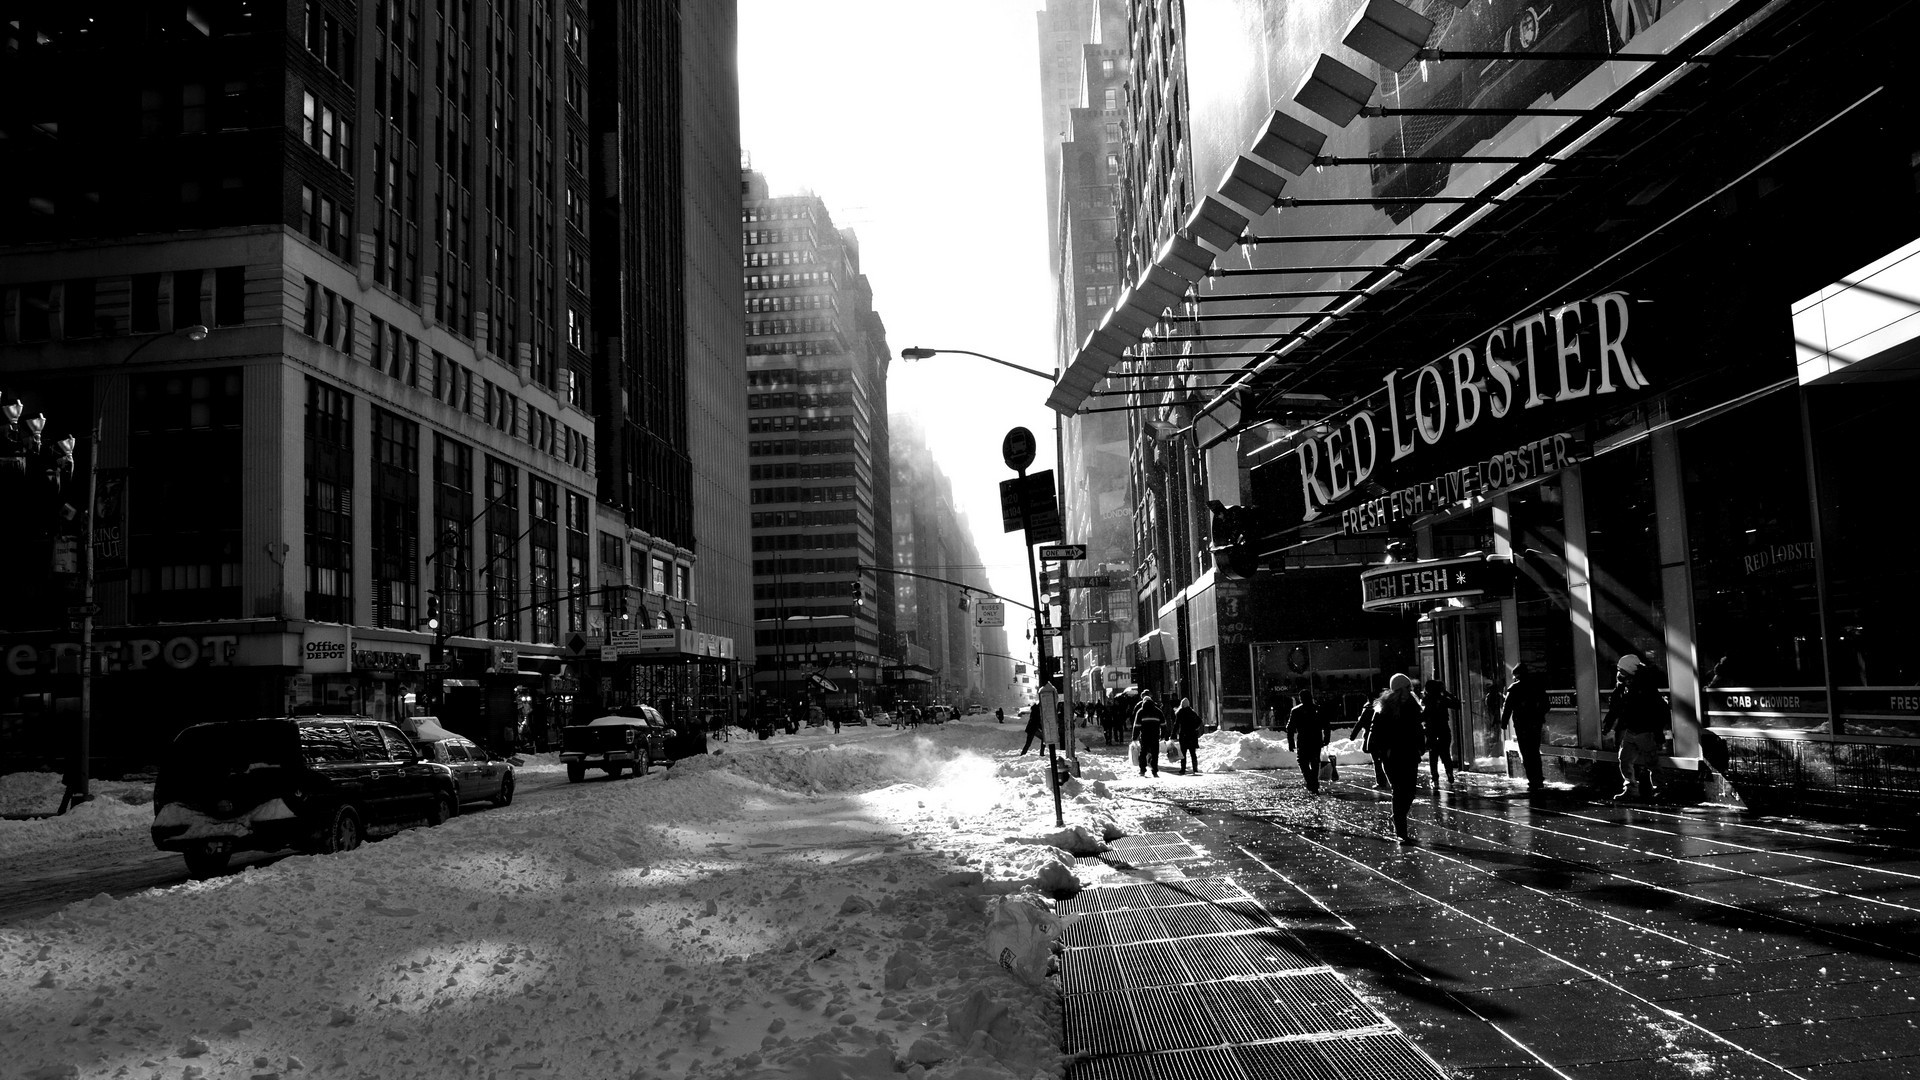 General 1920x1080 cityscape city building monochrome street snow New York City USA urban winter